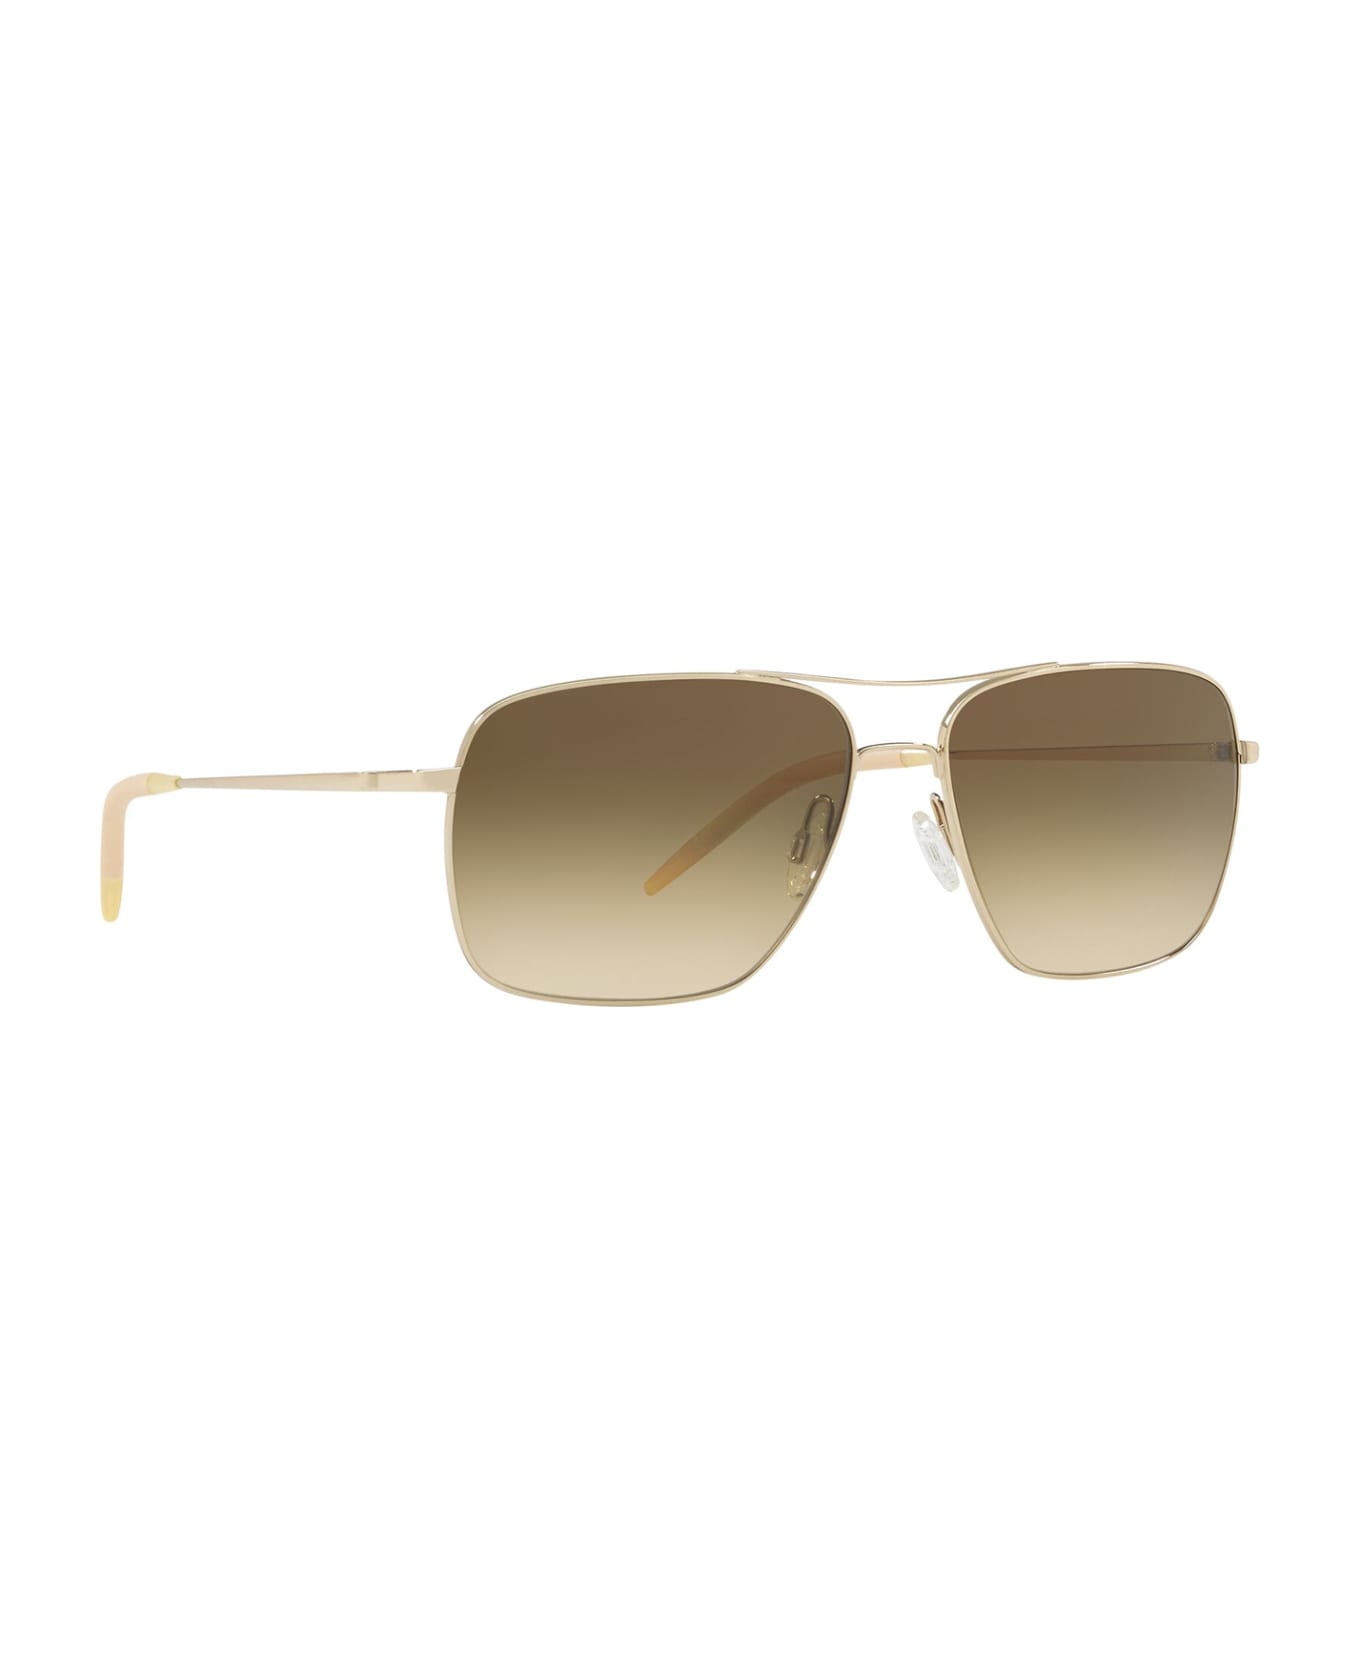 Oliver Peoples Ov1150s Gold Sunglasses - Gold